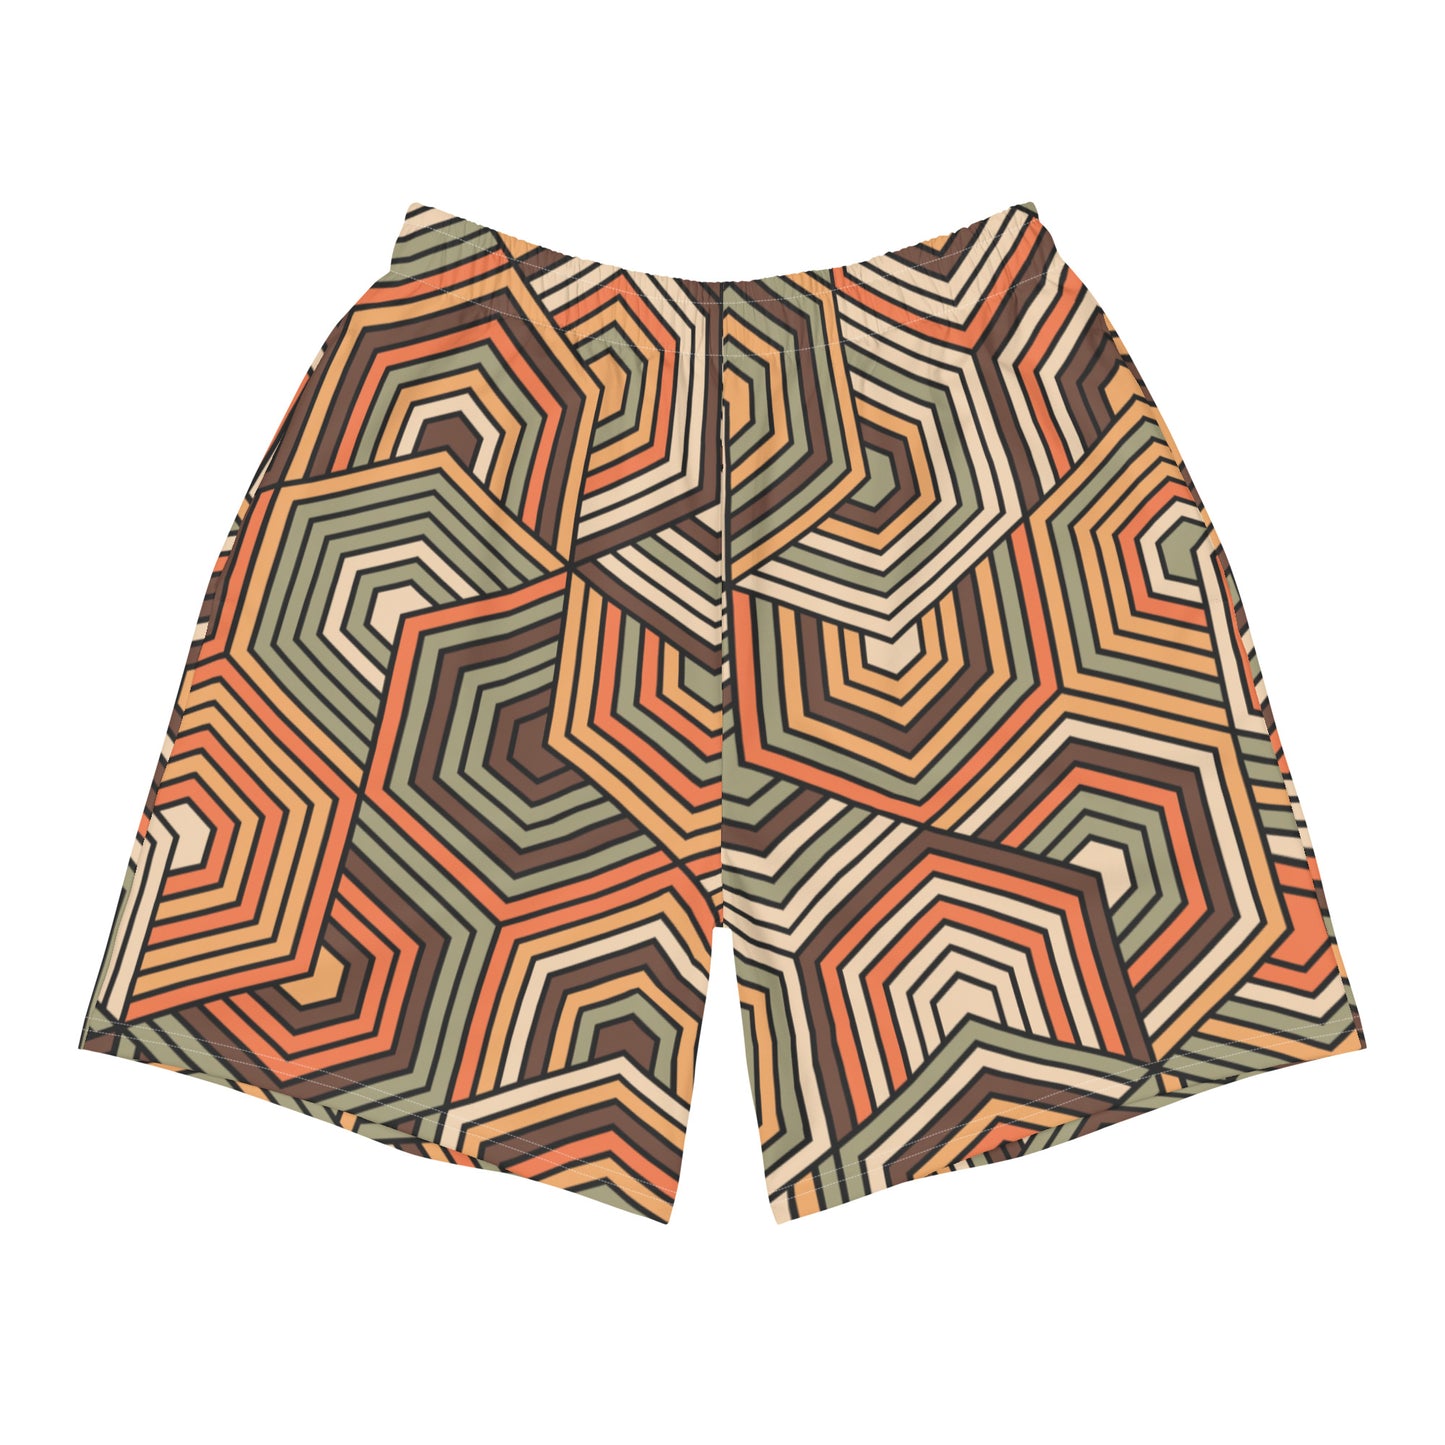 Hexagonal Pattern - Sustainably Made Men's Short